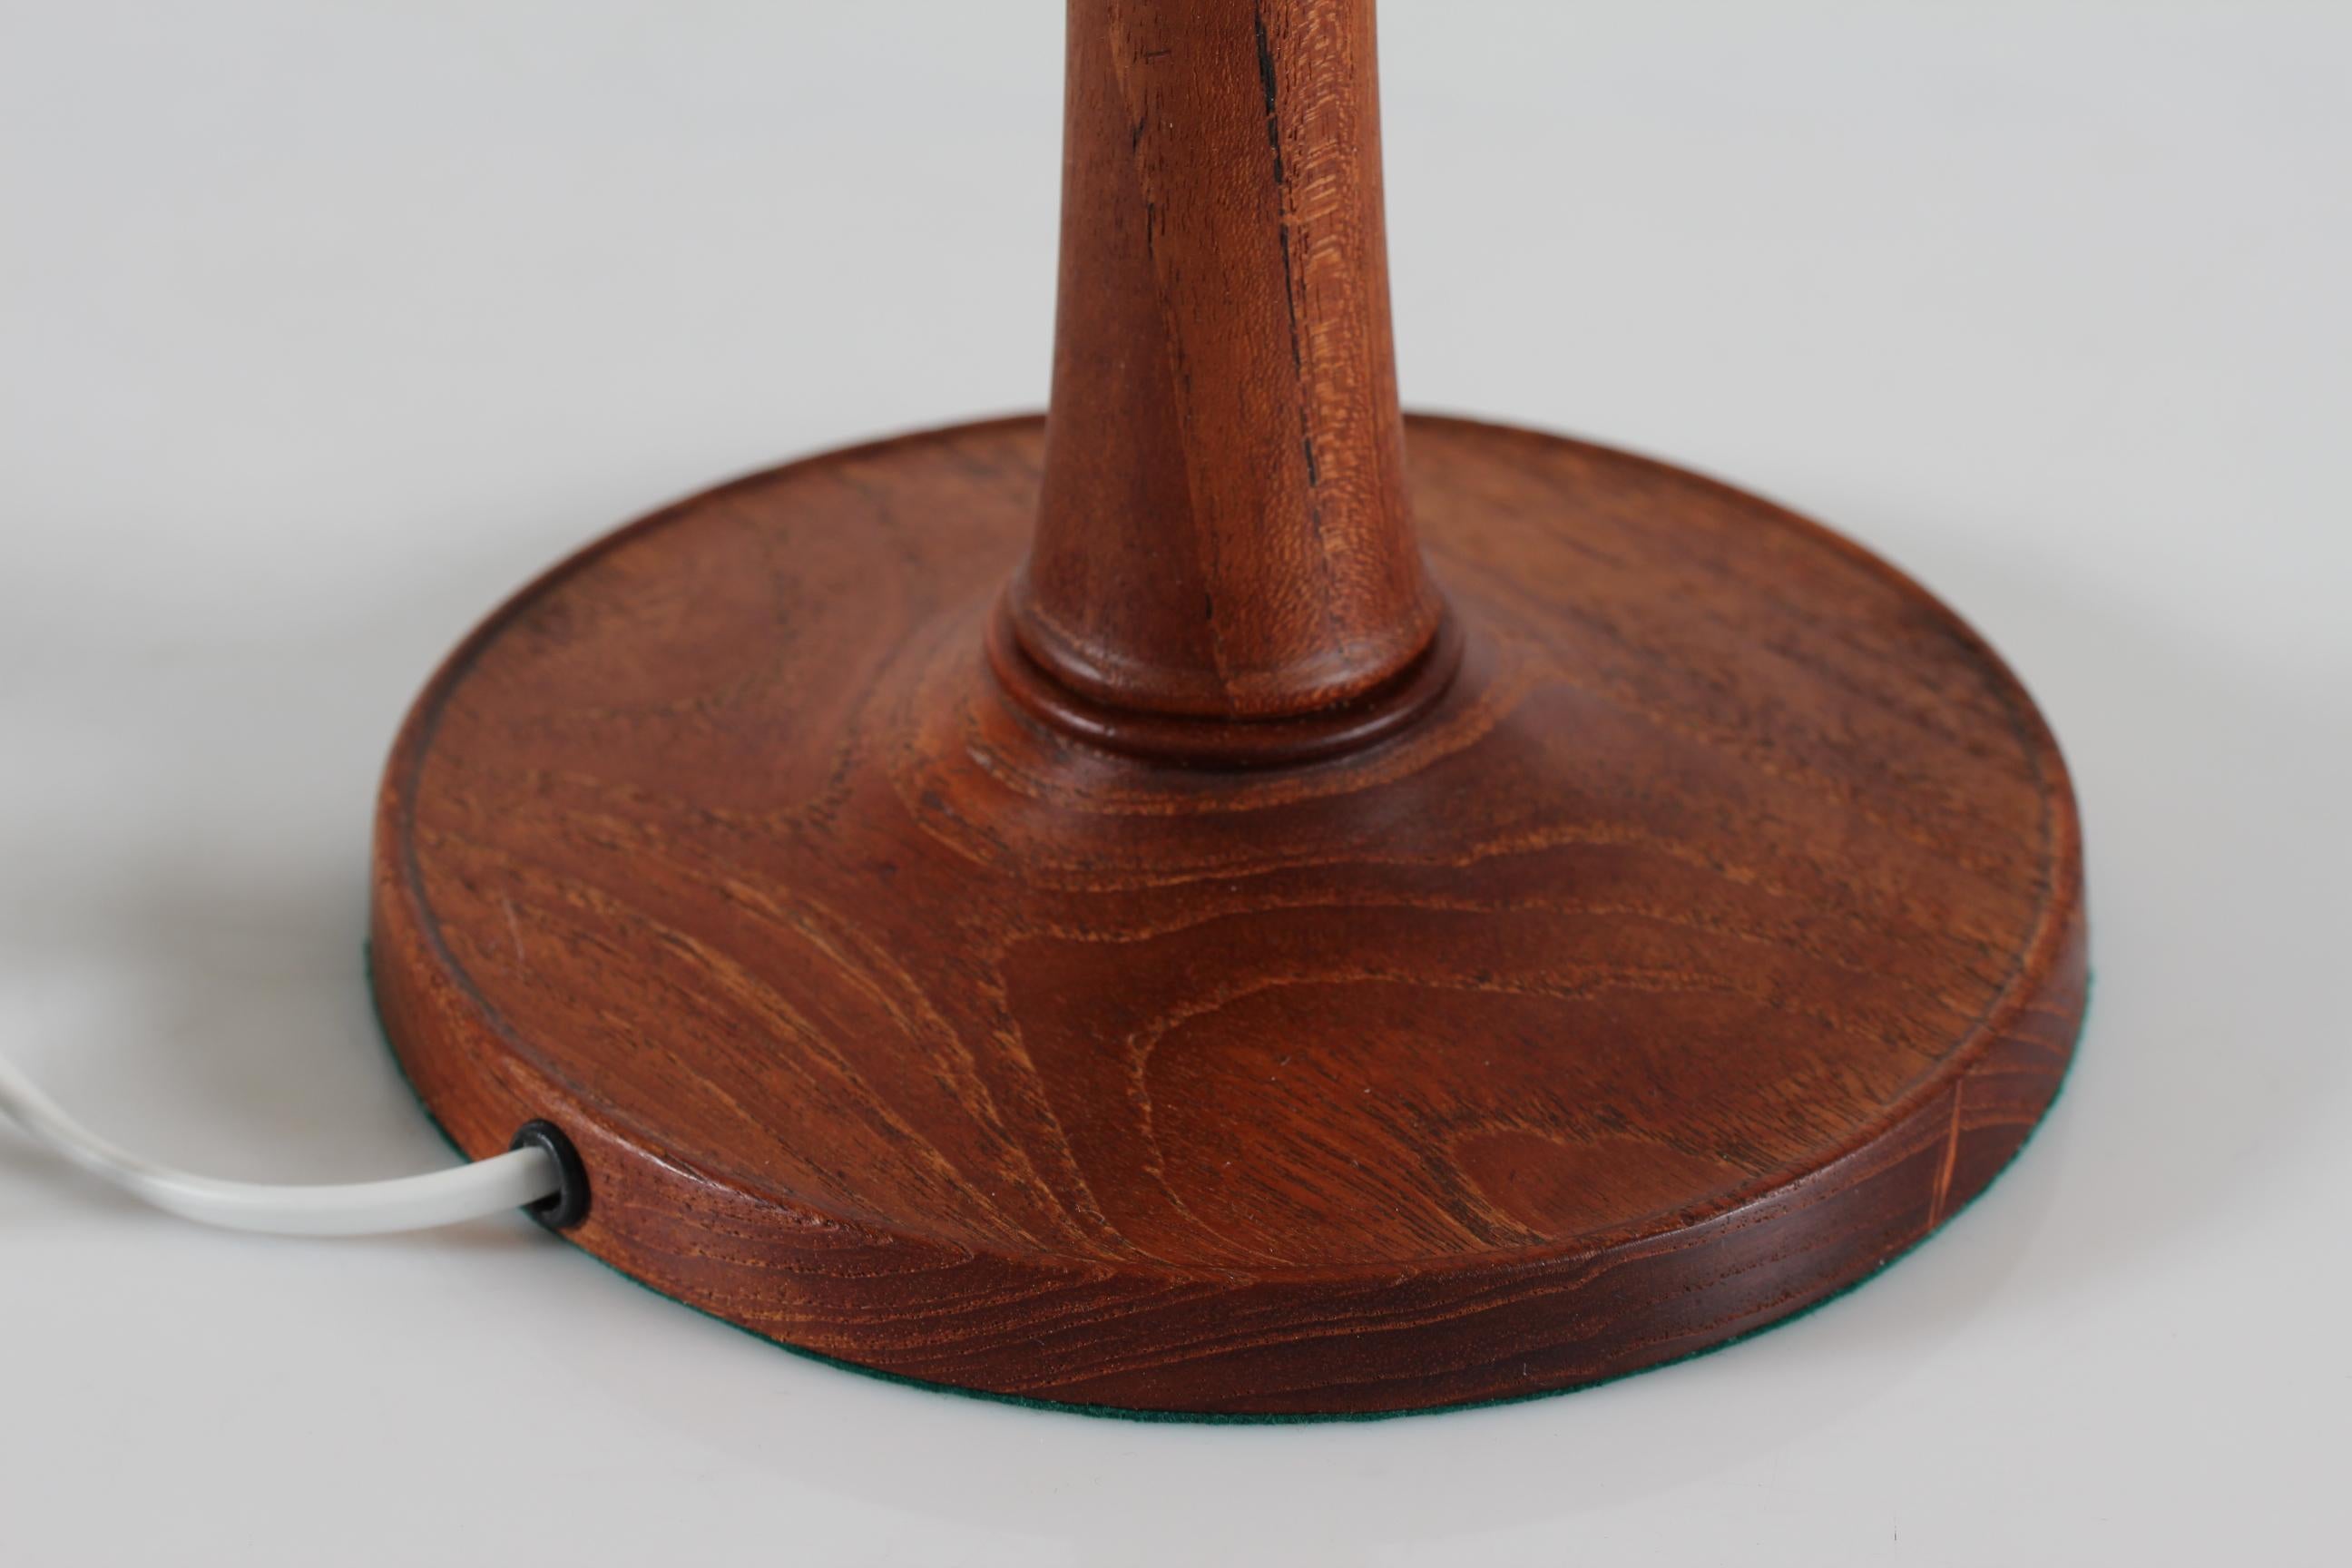 Scandinavian Modern Esben Klint Table Lamp Teak no. 327 with Original Le Klint Lamp Shade